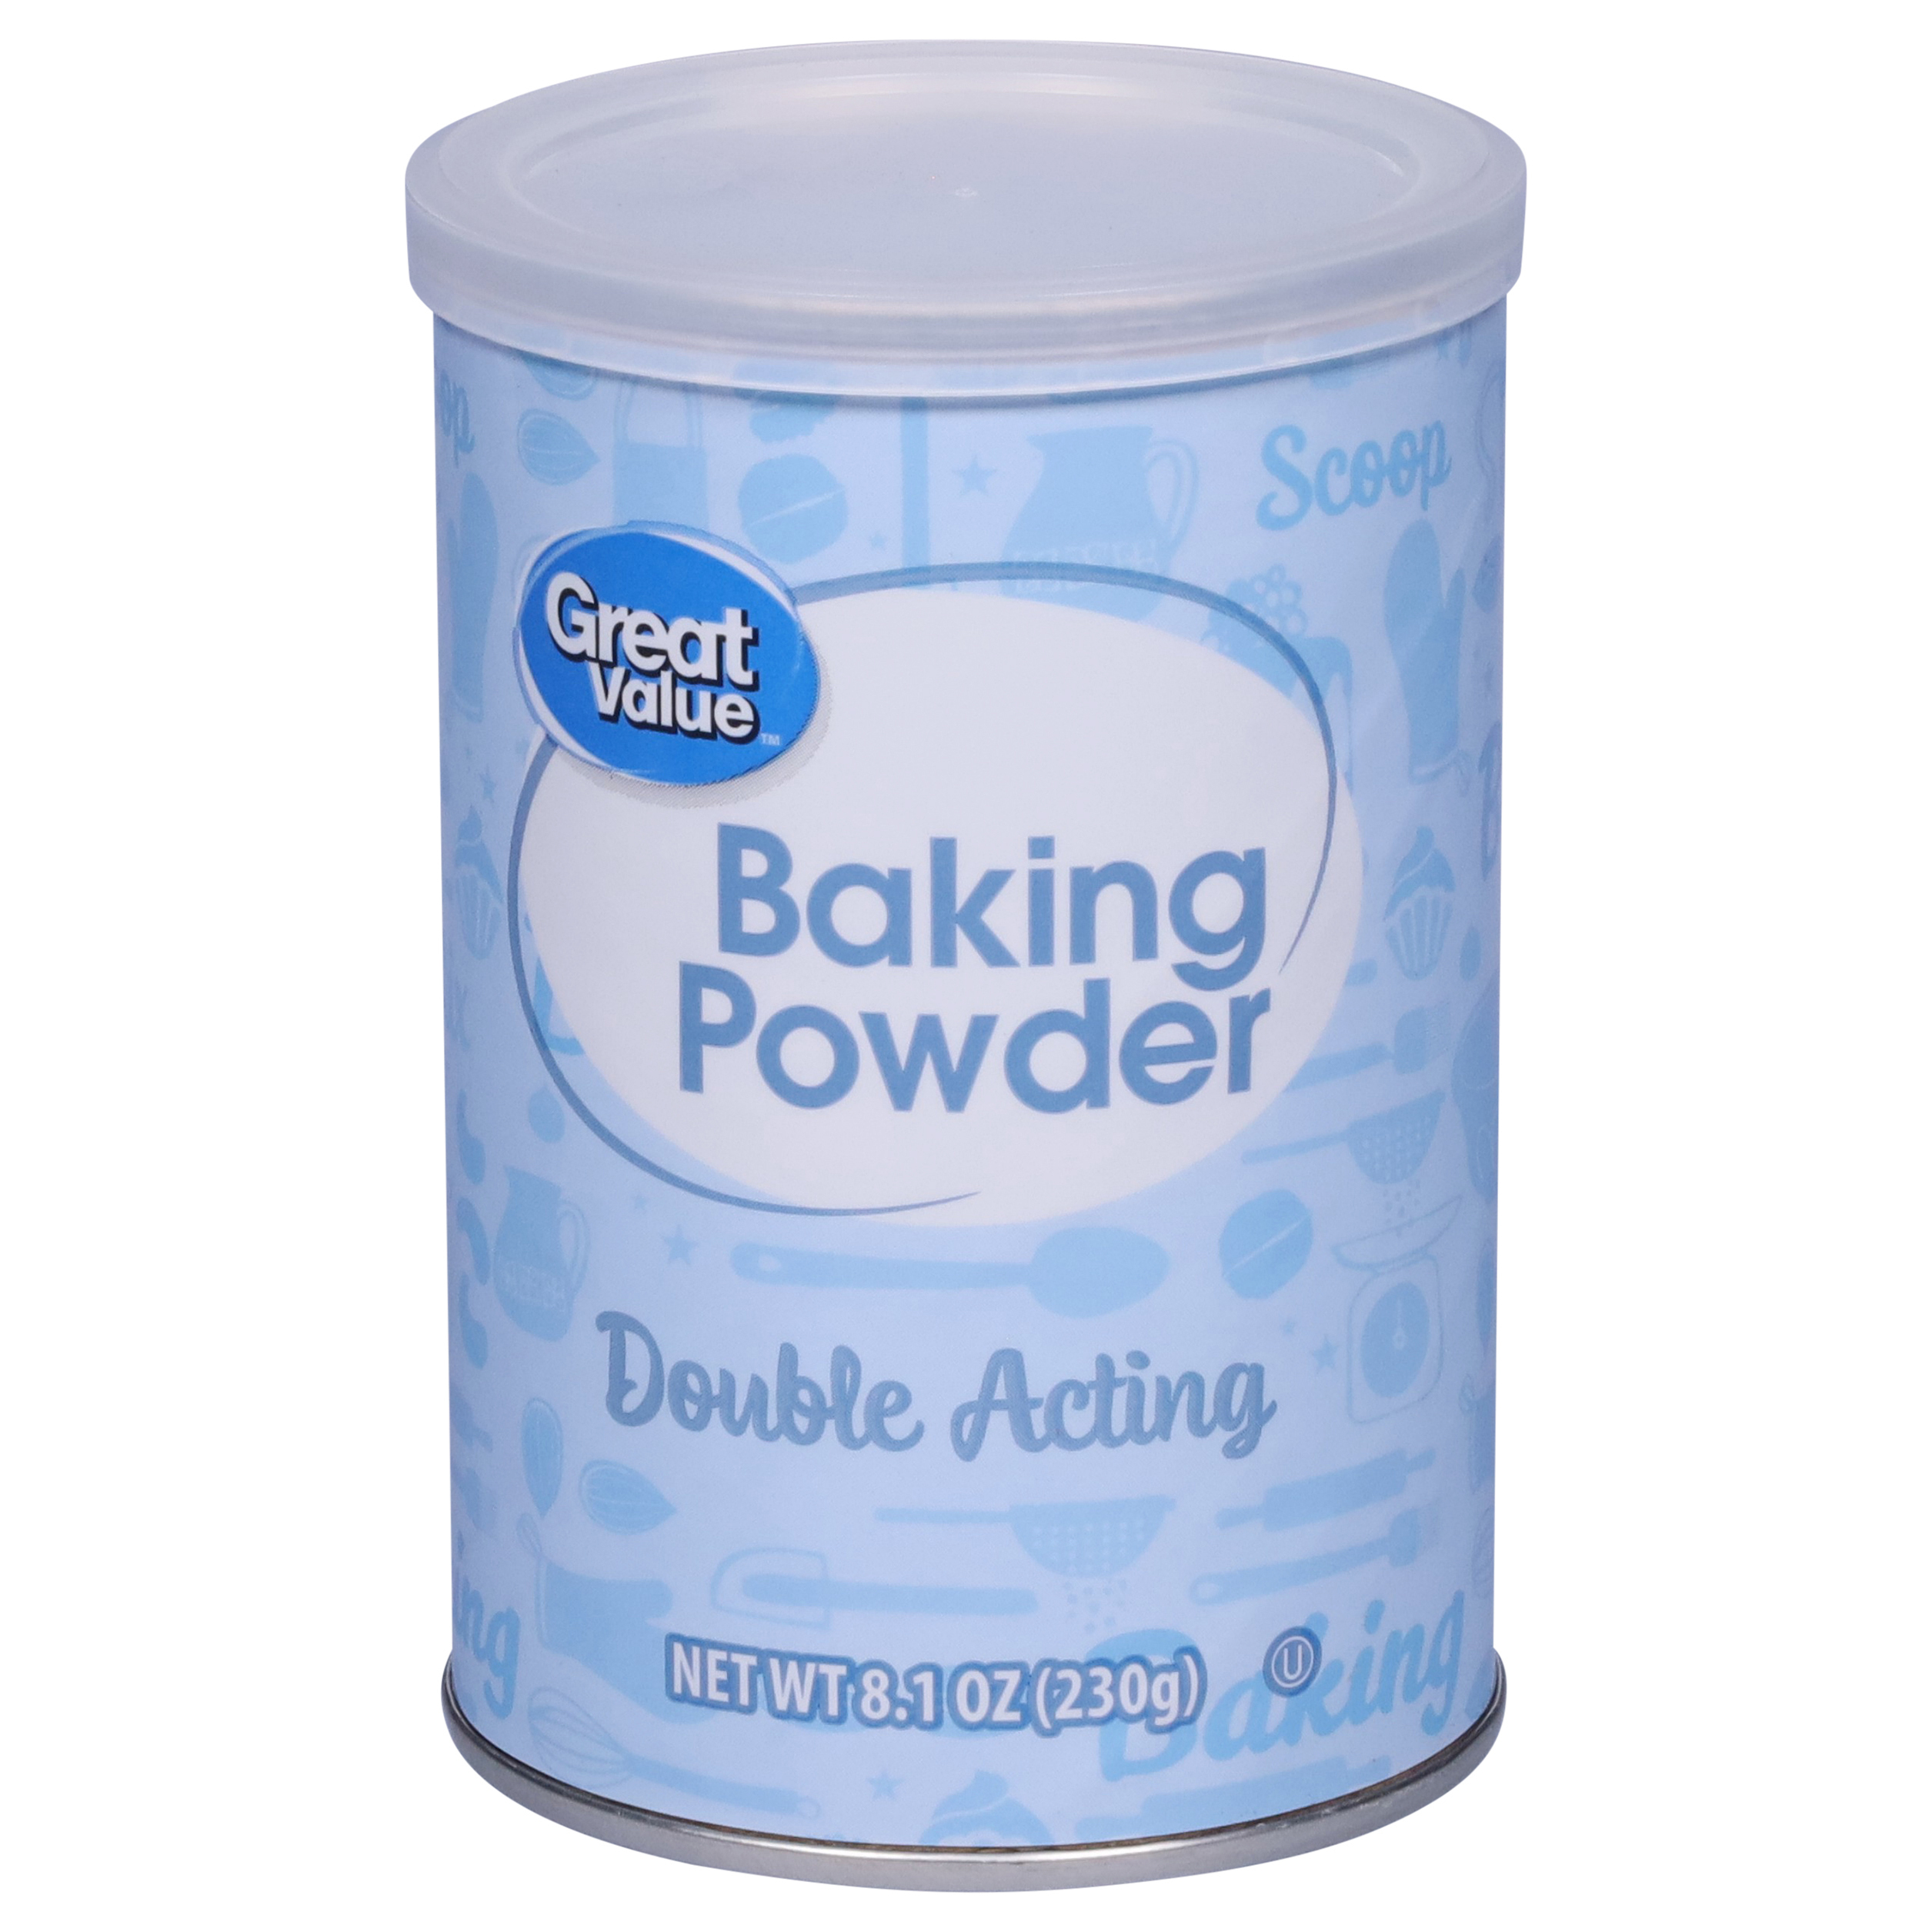 Great Value Double Acting Baking Powder, 8.1 oz - image 1 of 7